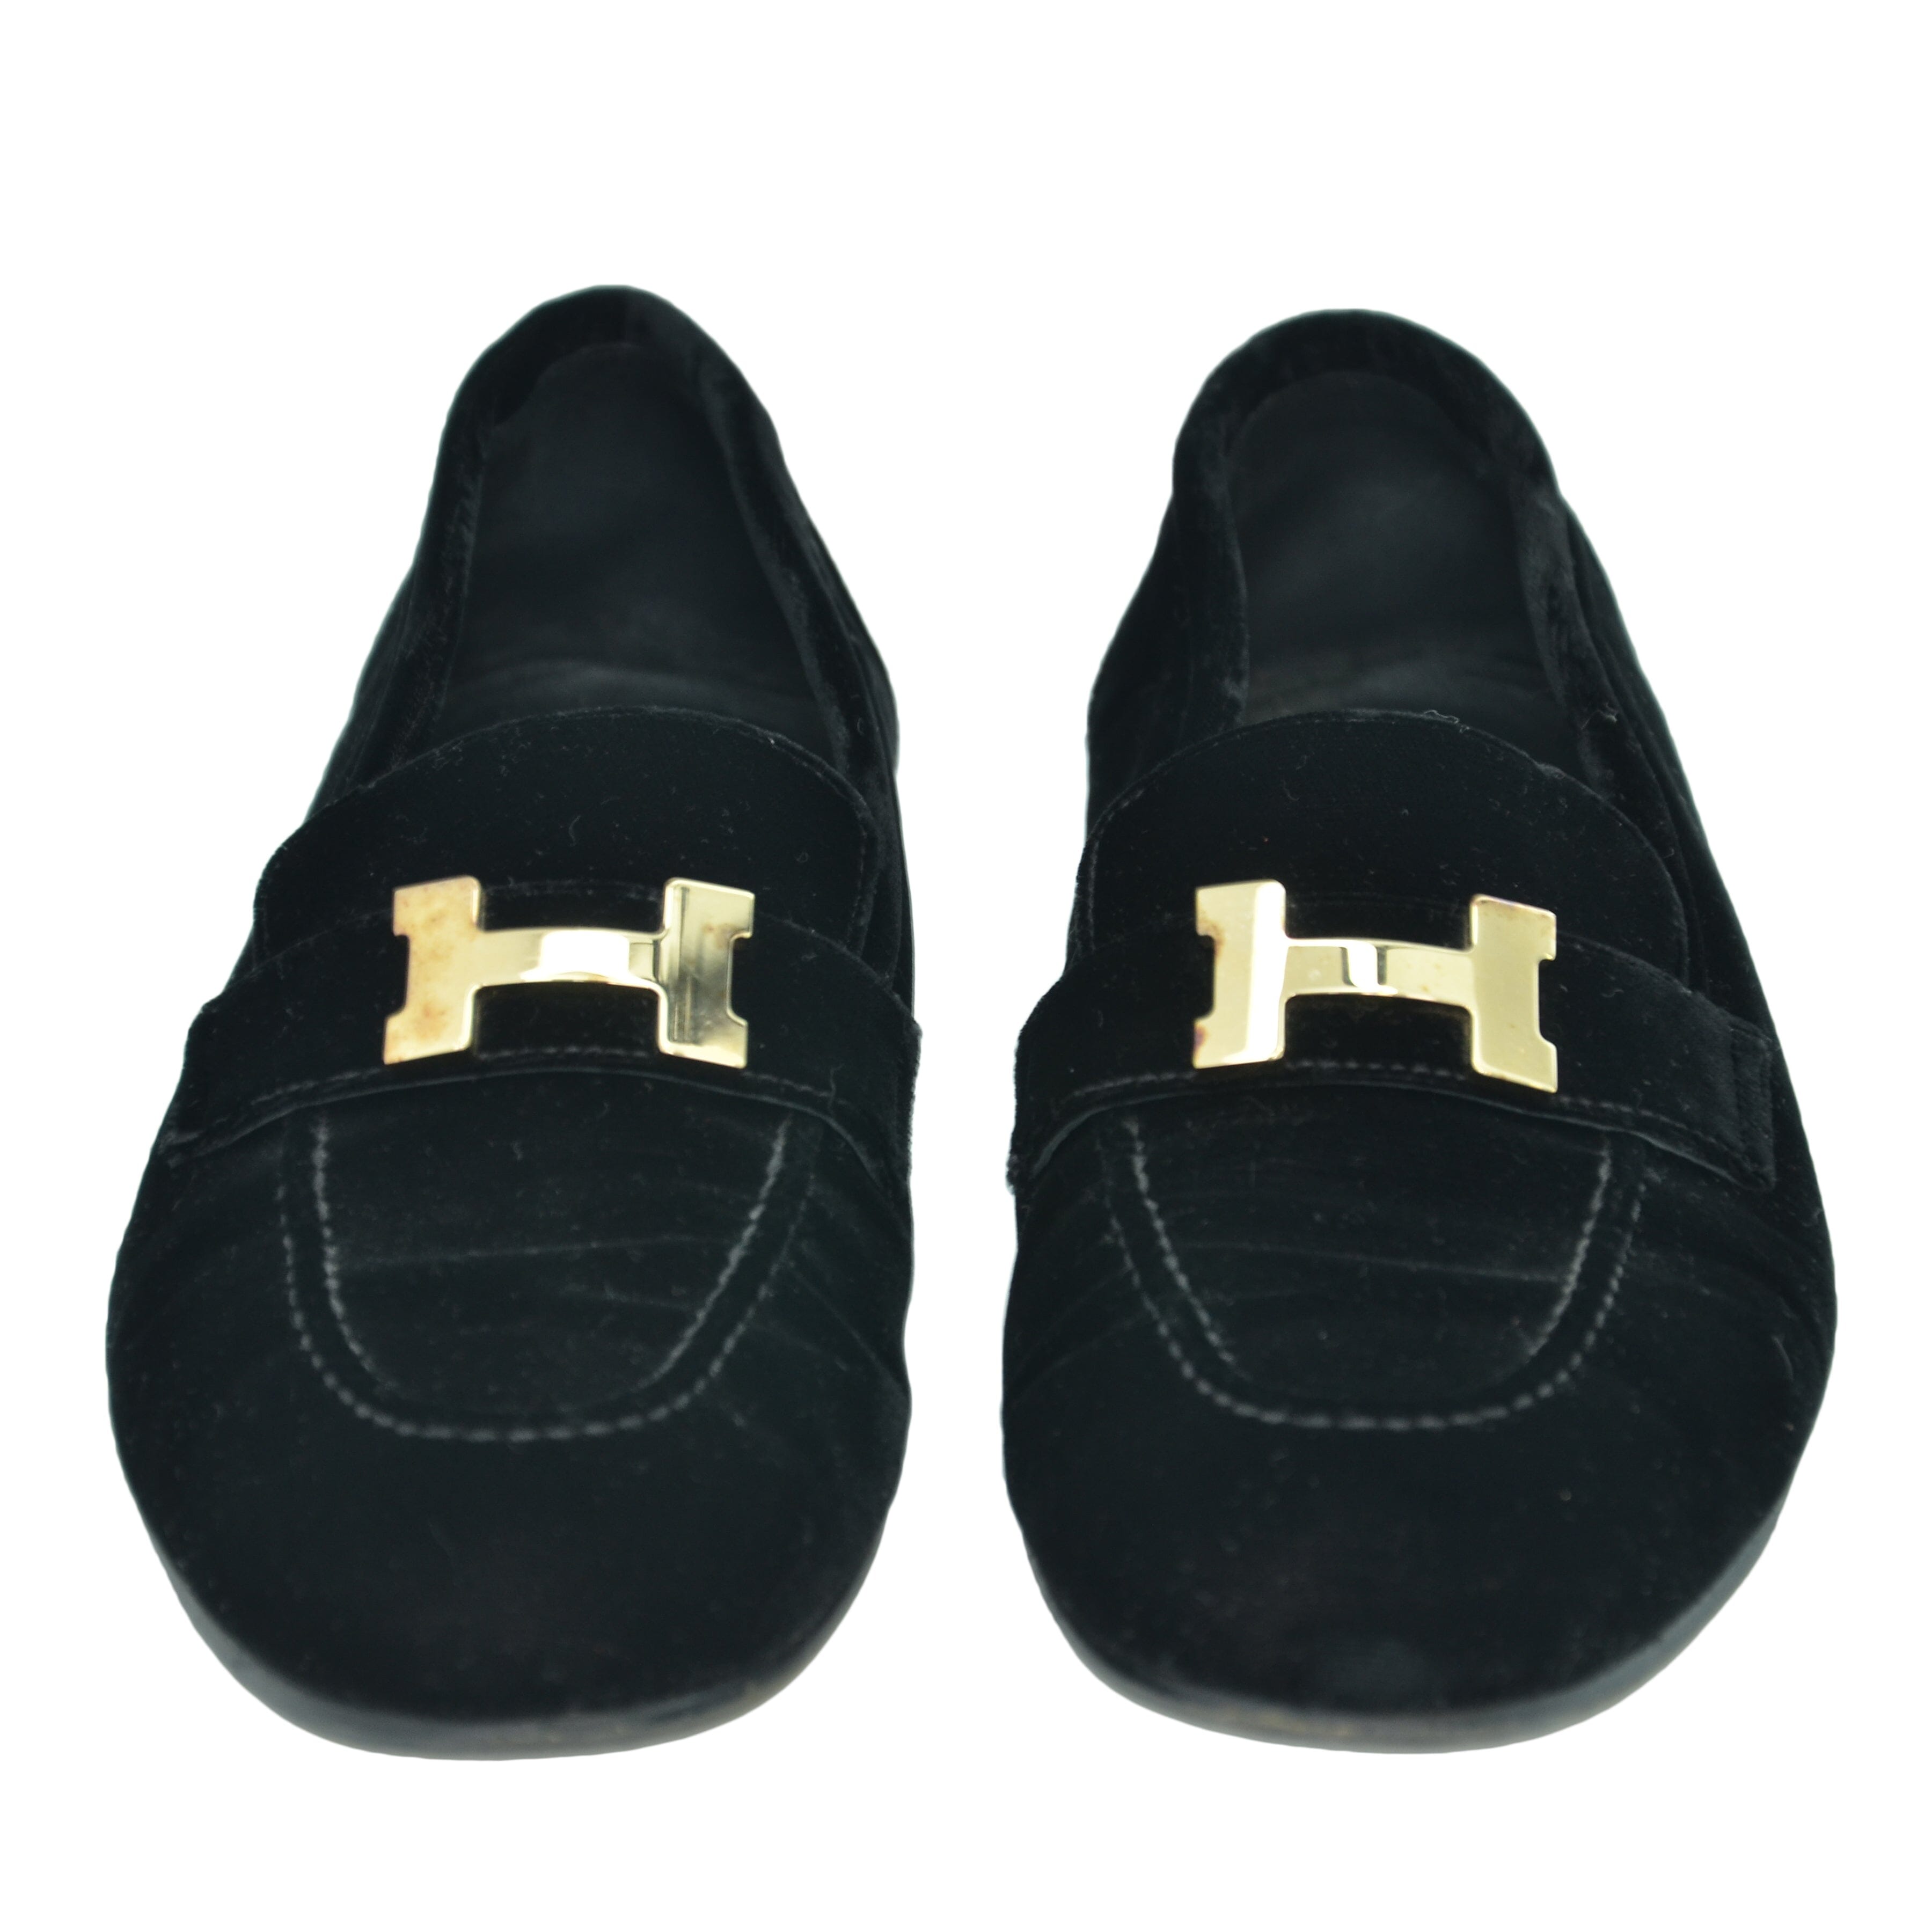 Hermes Black Suede Paris Loafers Shoes Hermes